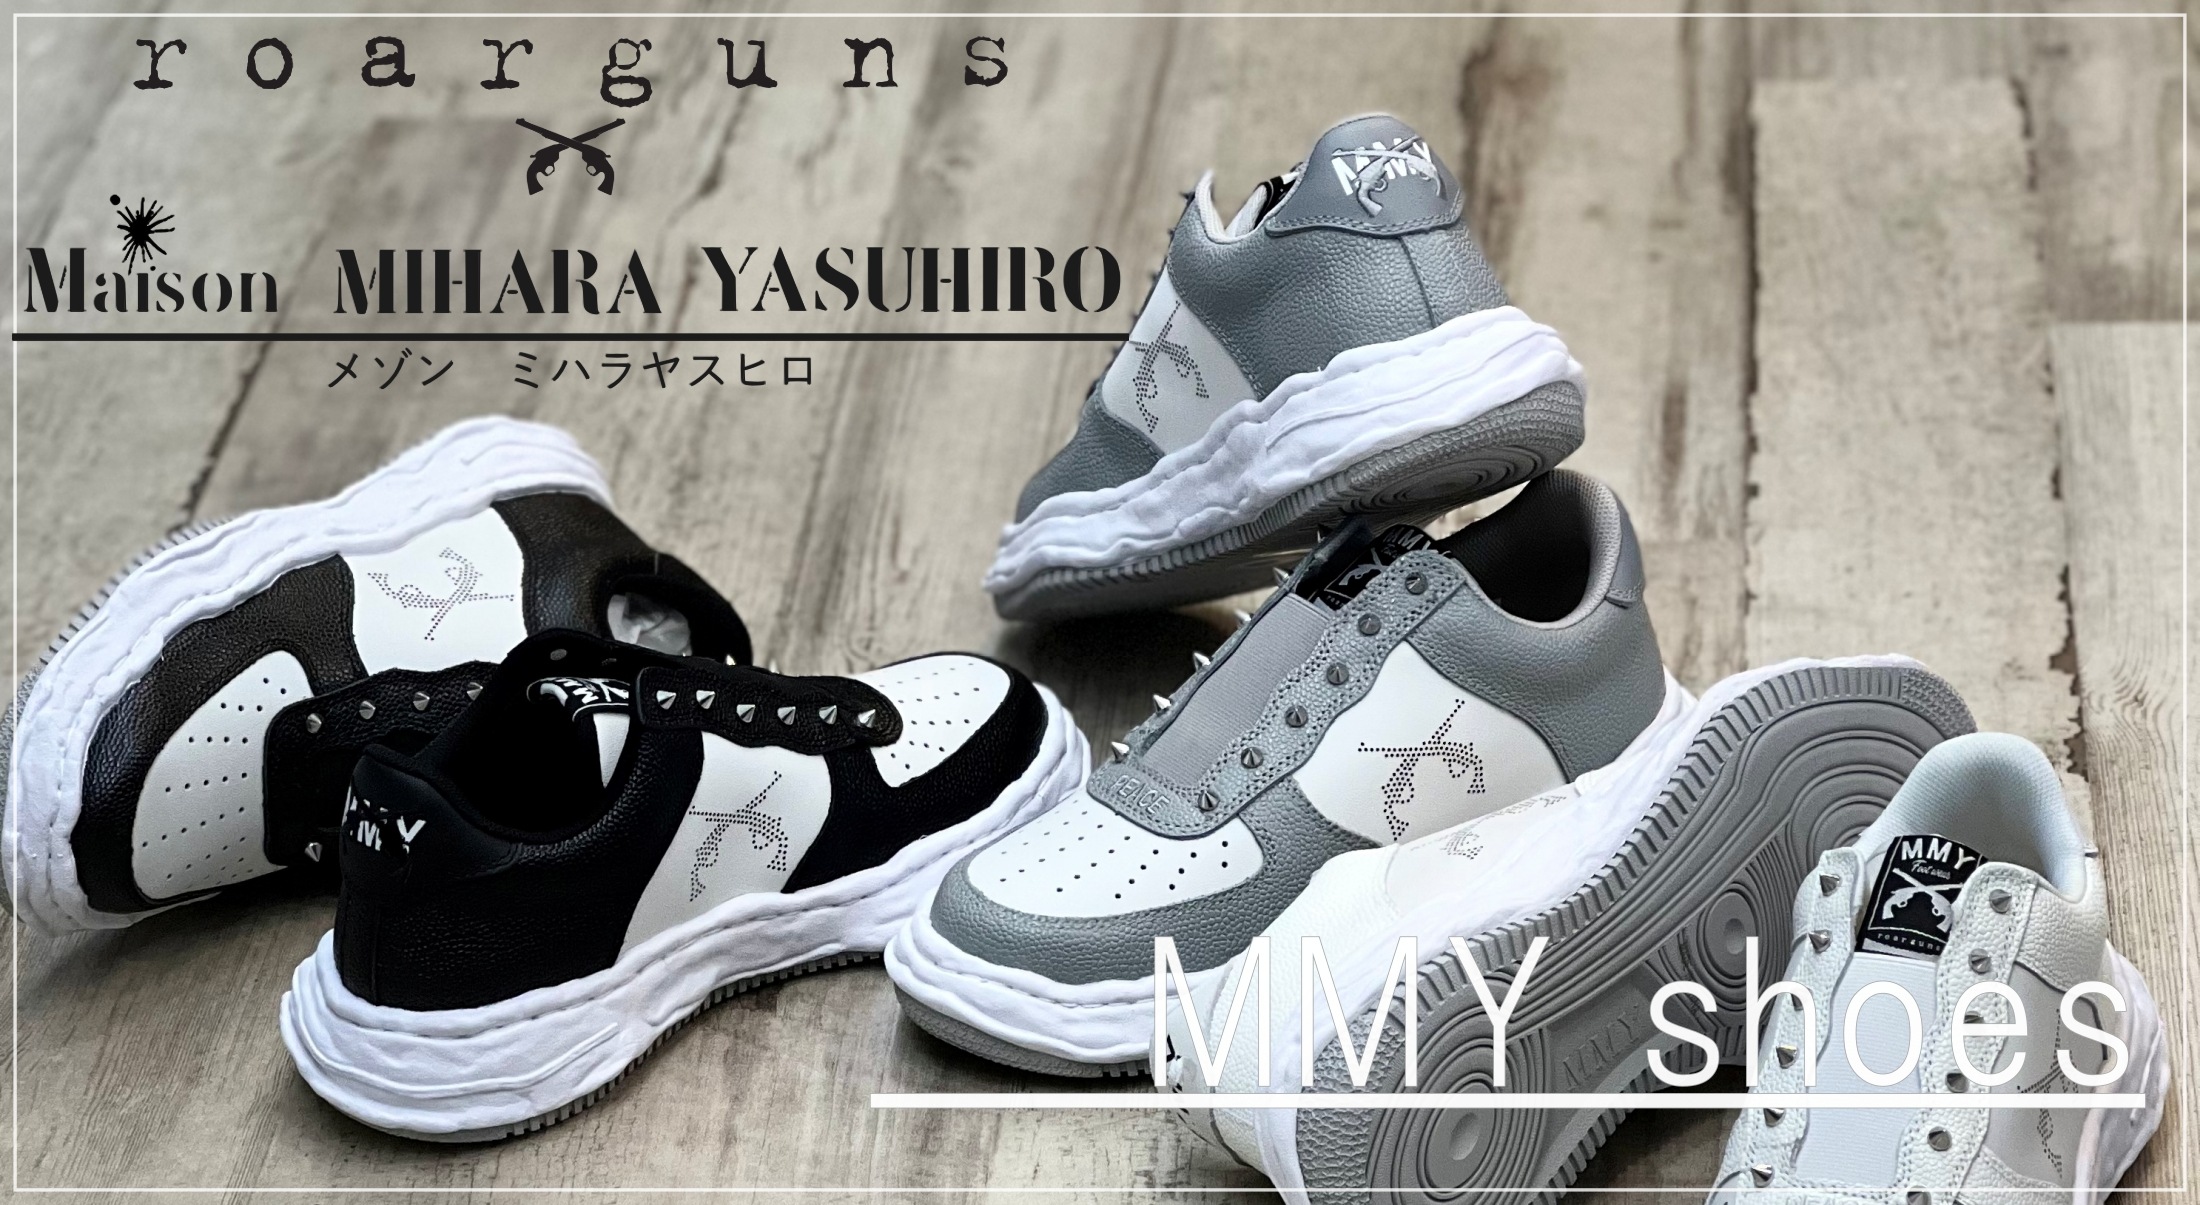 roar-miharayasuhiro MMY shoes 